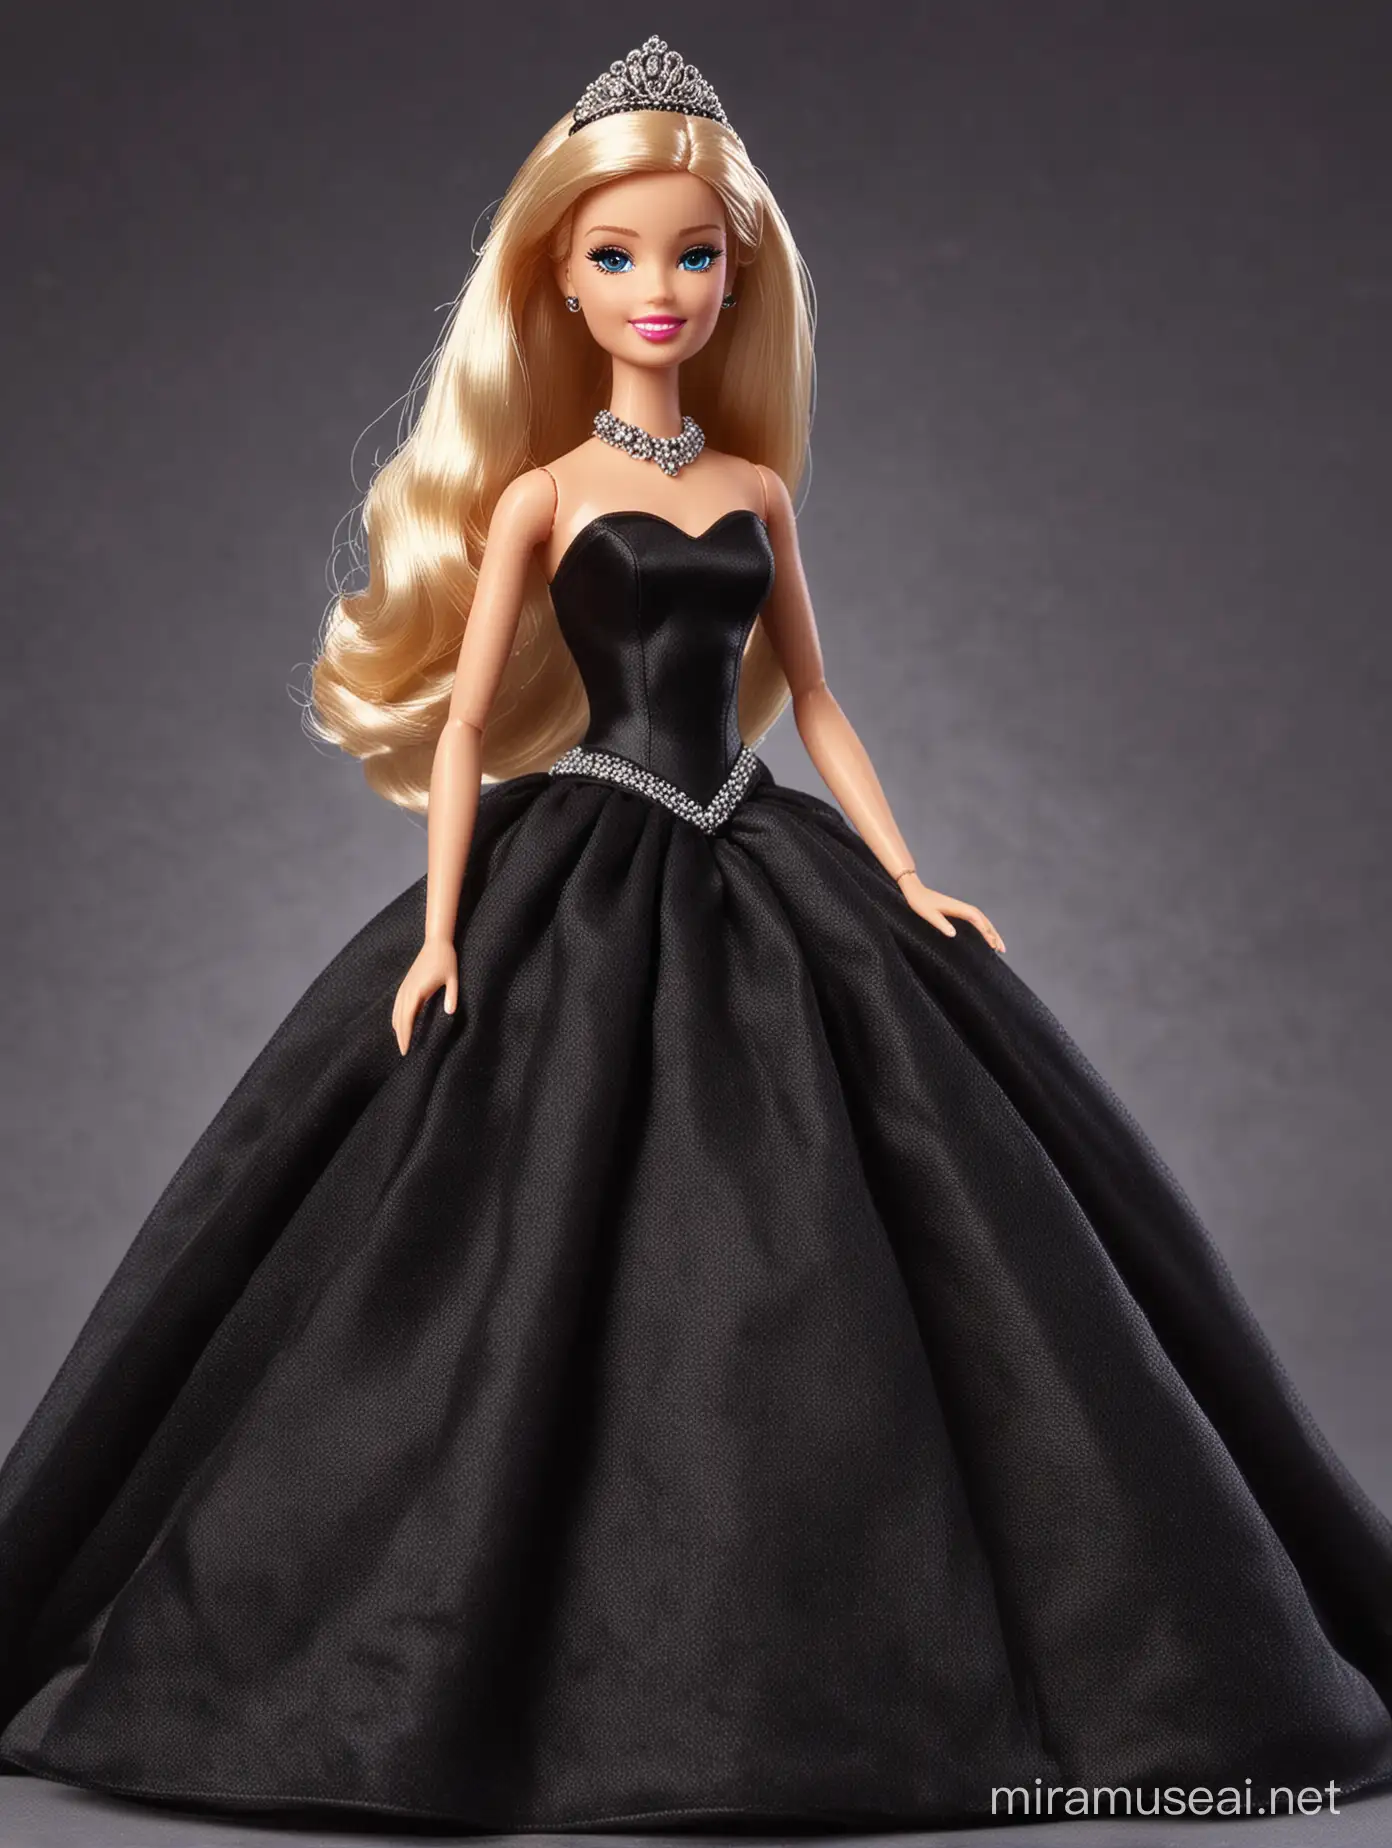 Elegant Black Princess Barbie in a Majestic Ballroom